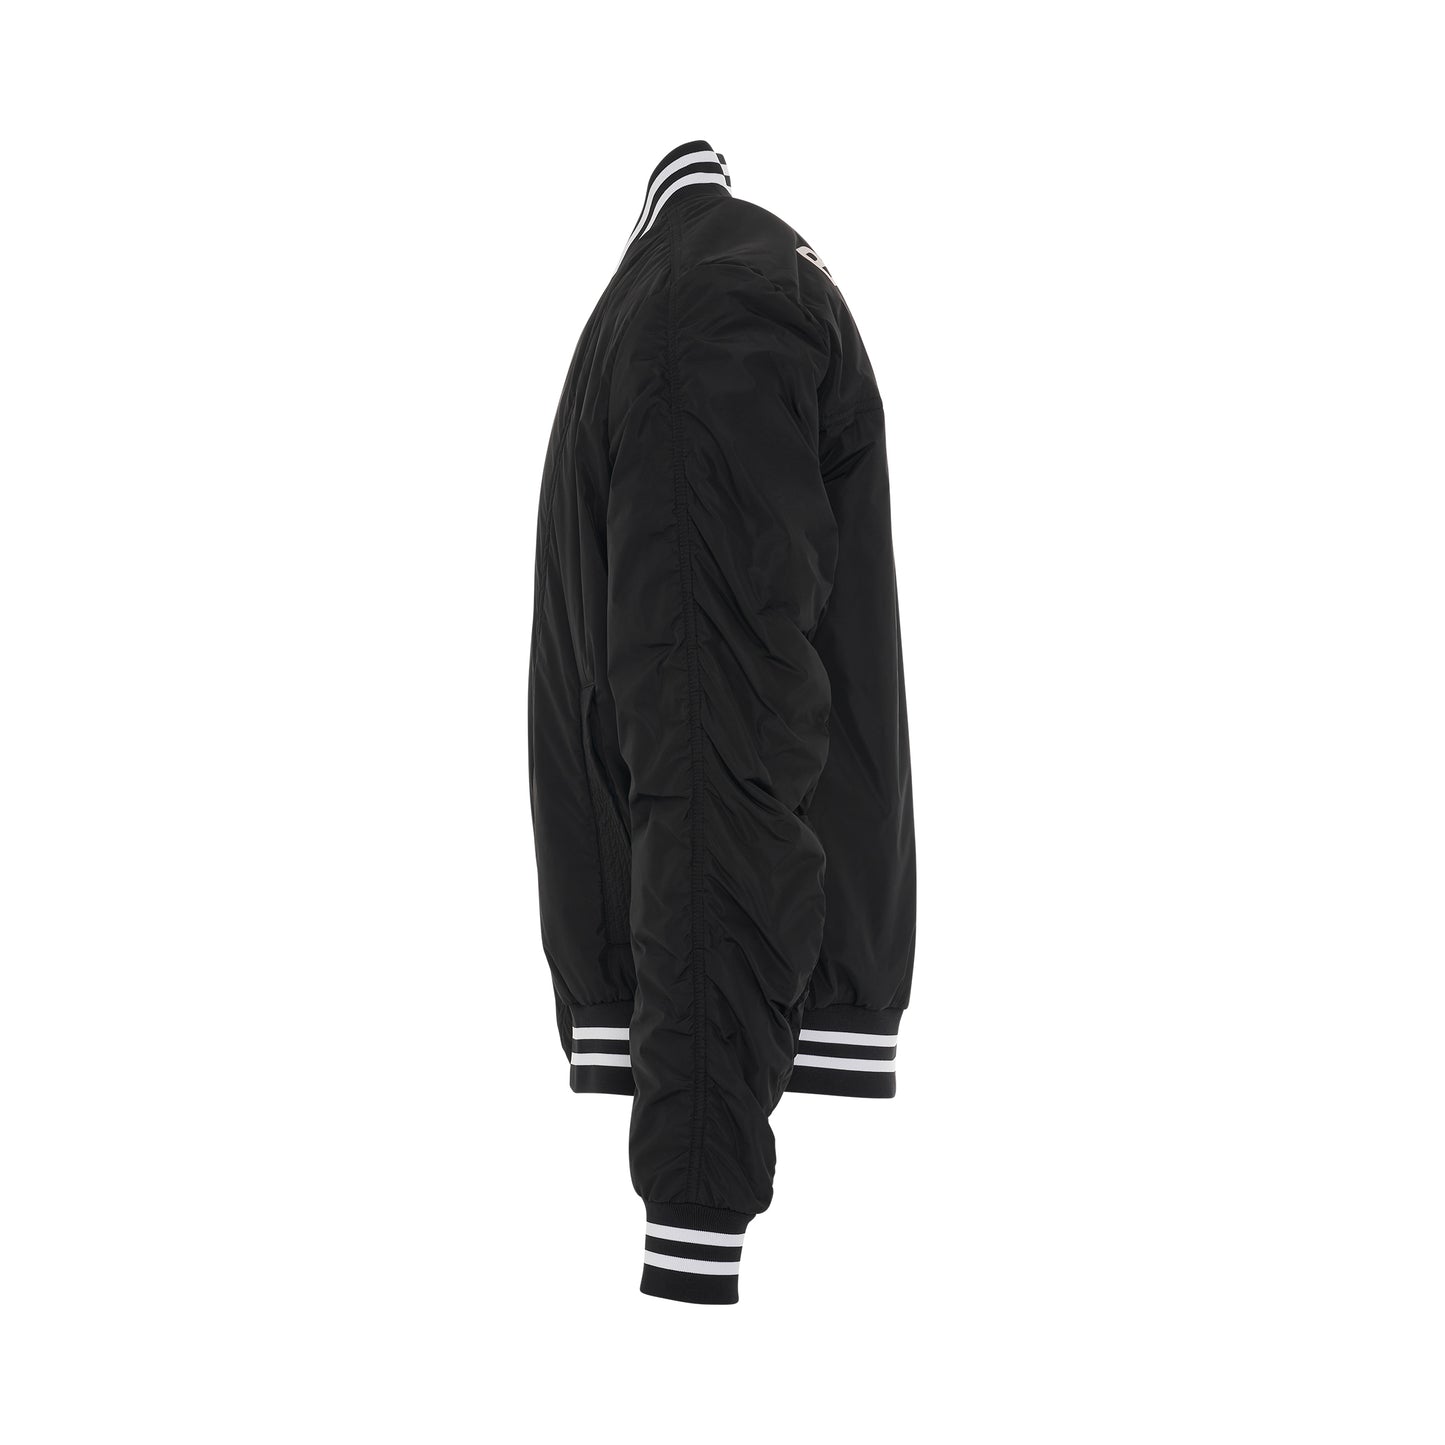 Nylon Diagonal Zip Bomber Jacket in Black/White